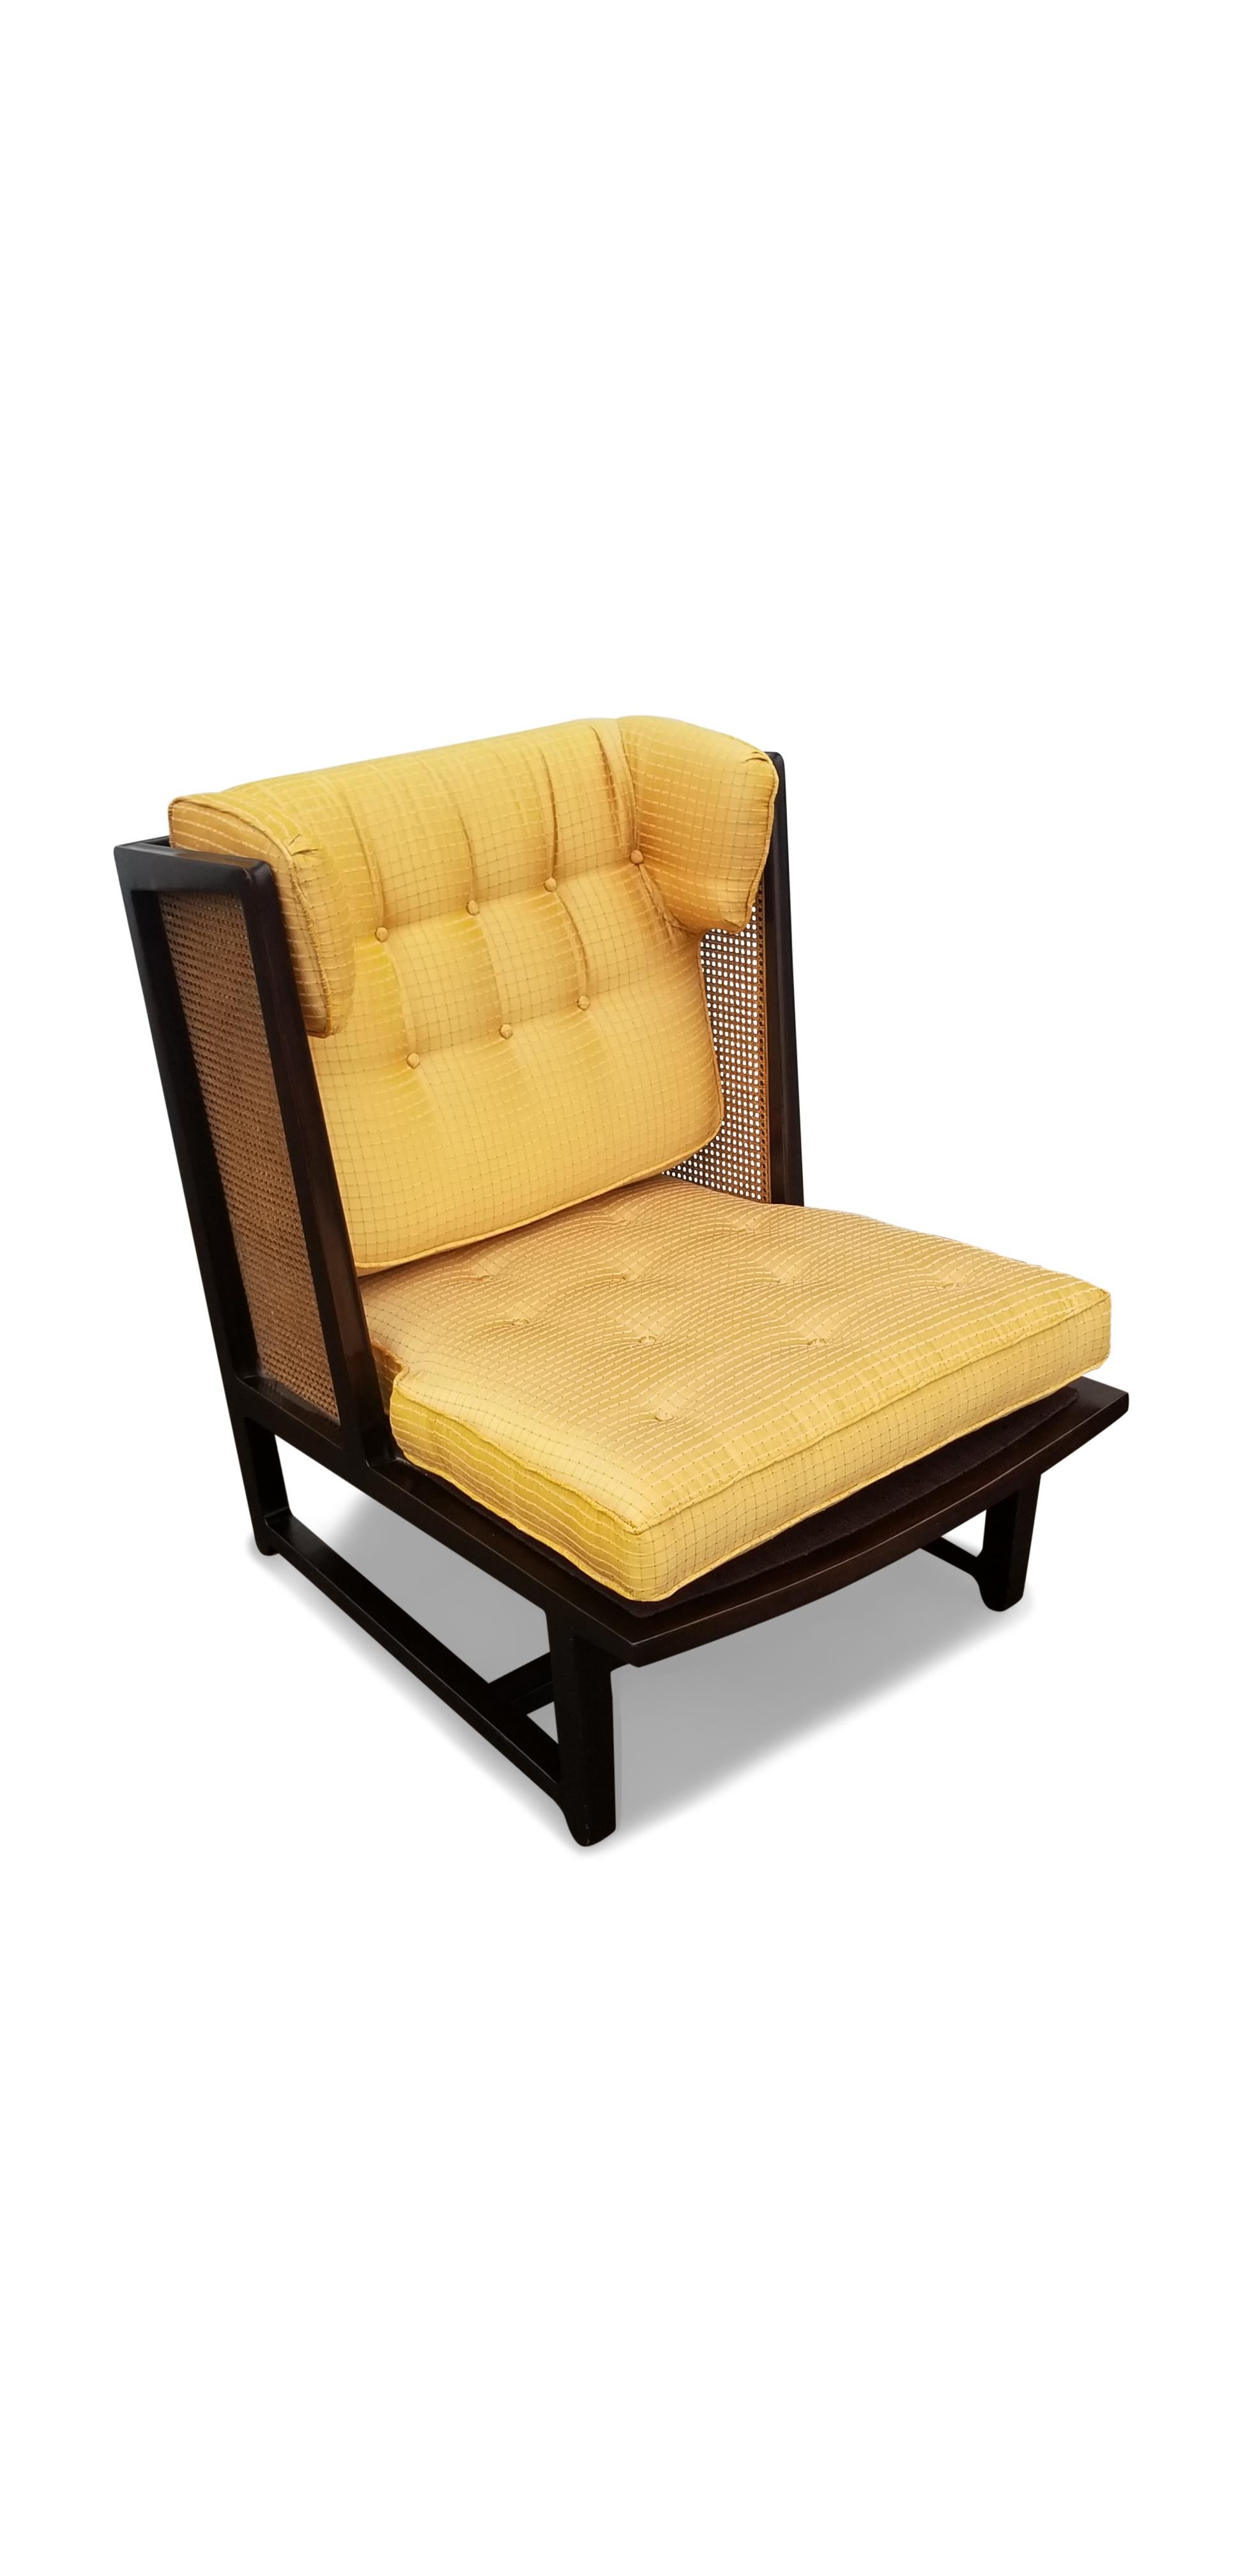 Edward Wormley for Dunbar wing lounge chair model 6016.